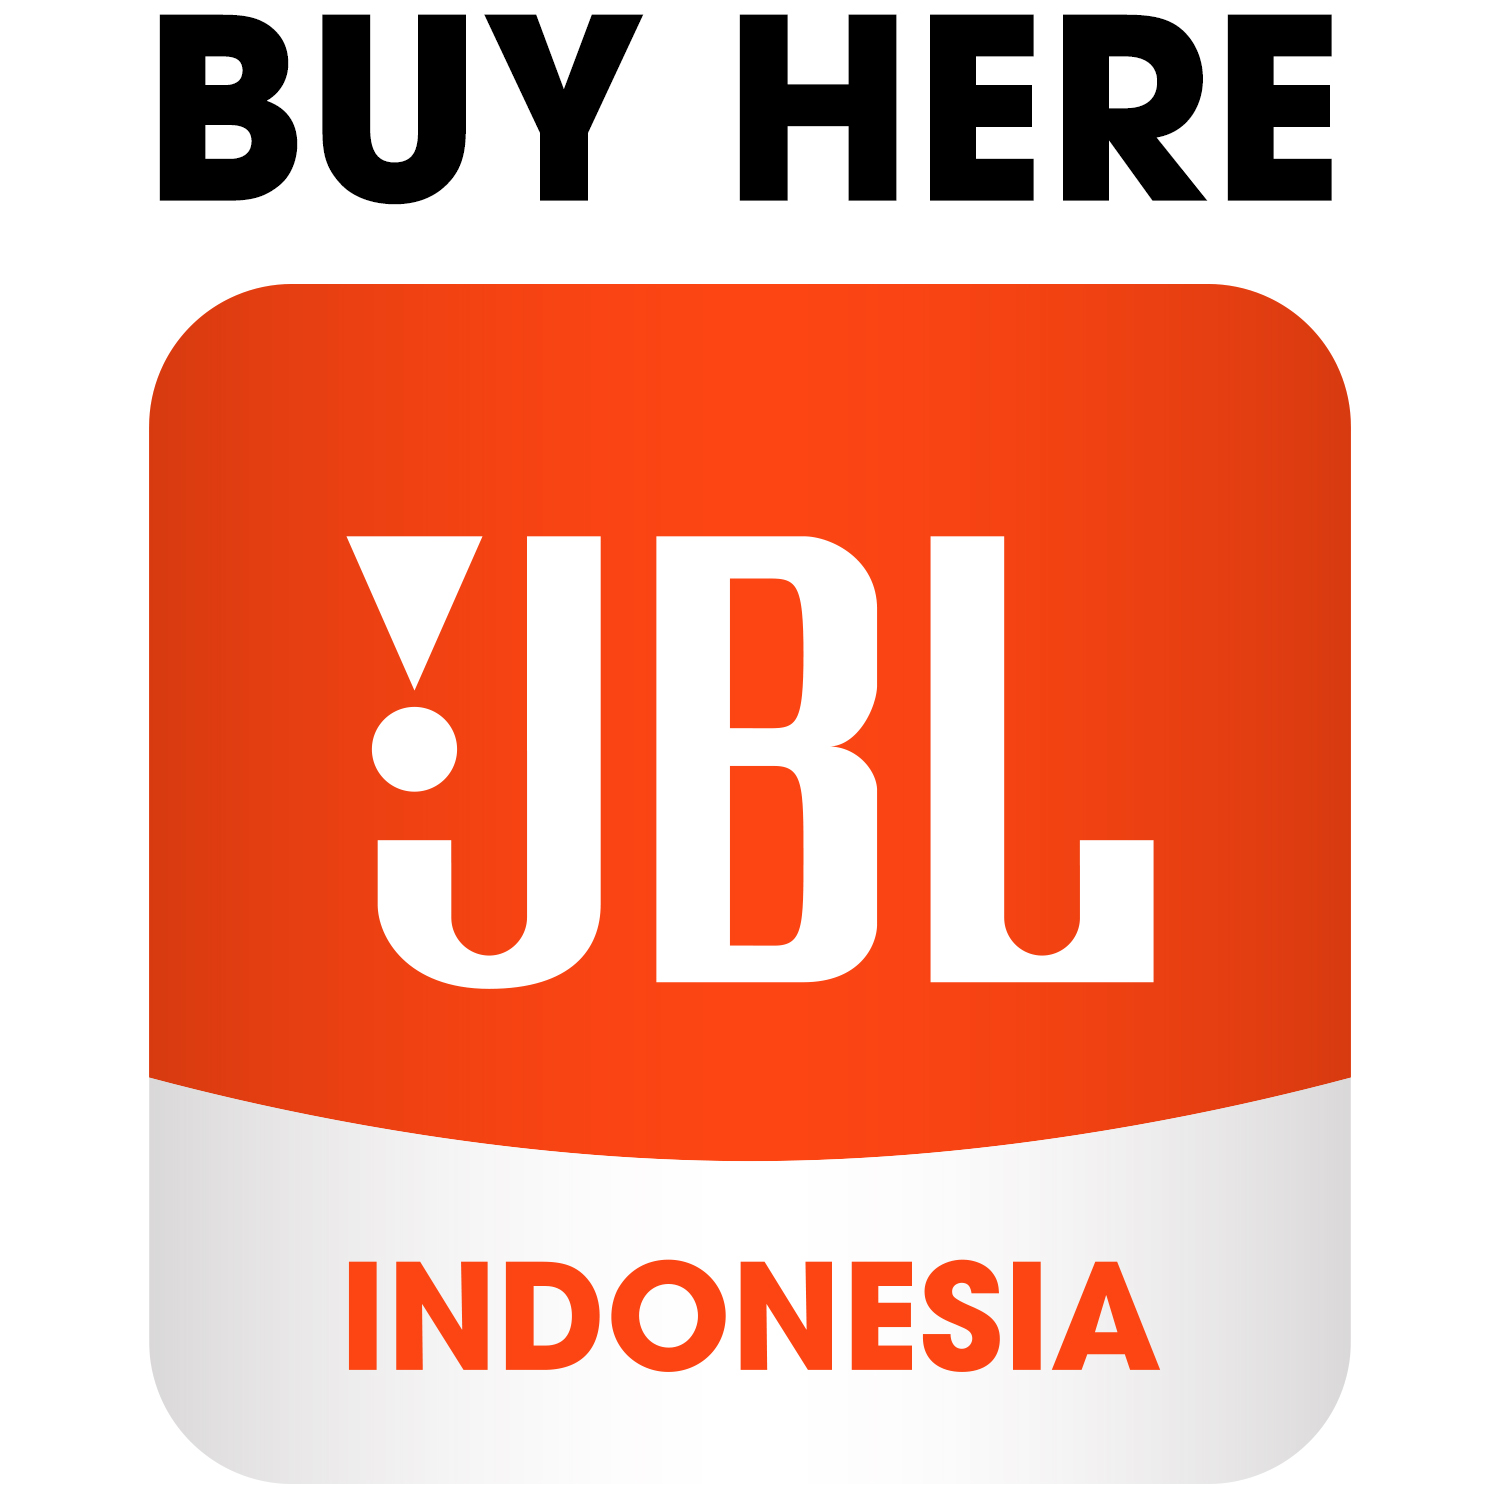 JBL Indonesia